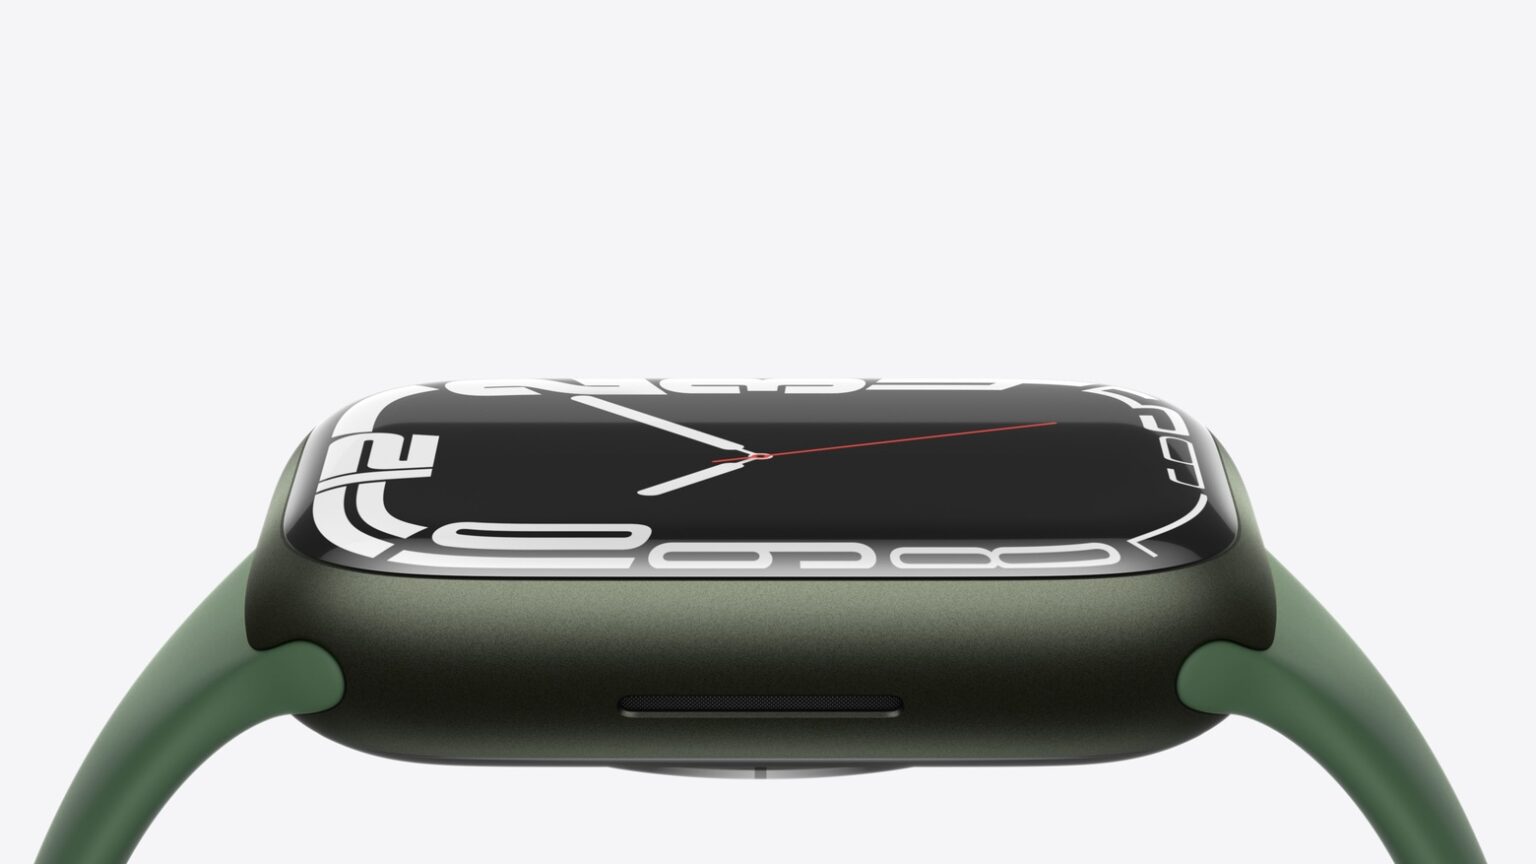 Apple Watch Series 7 review roundup: Bigger is a bit better